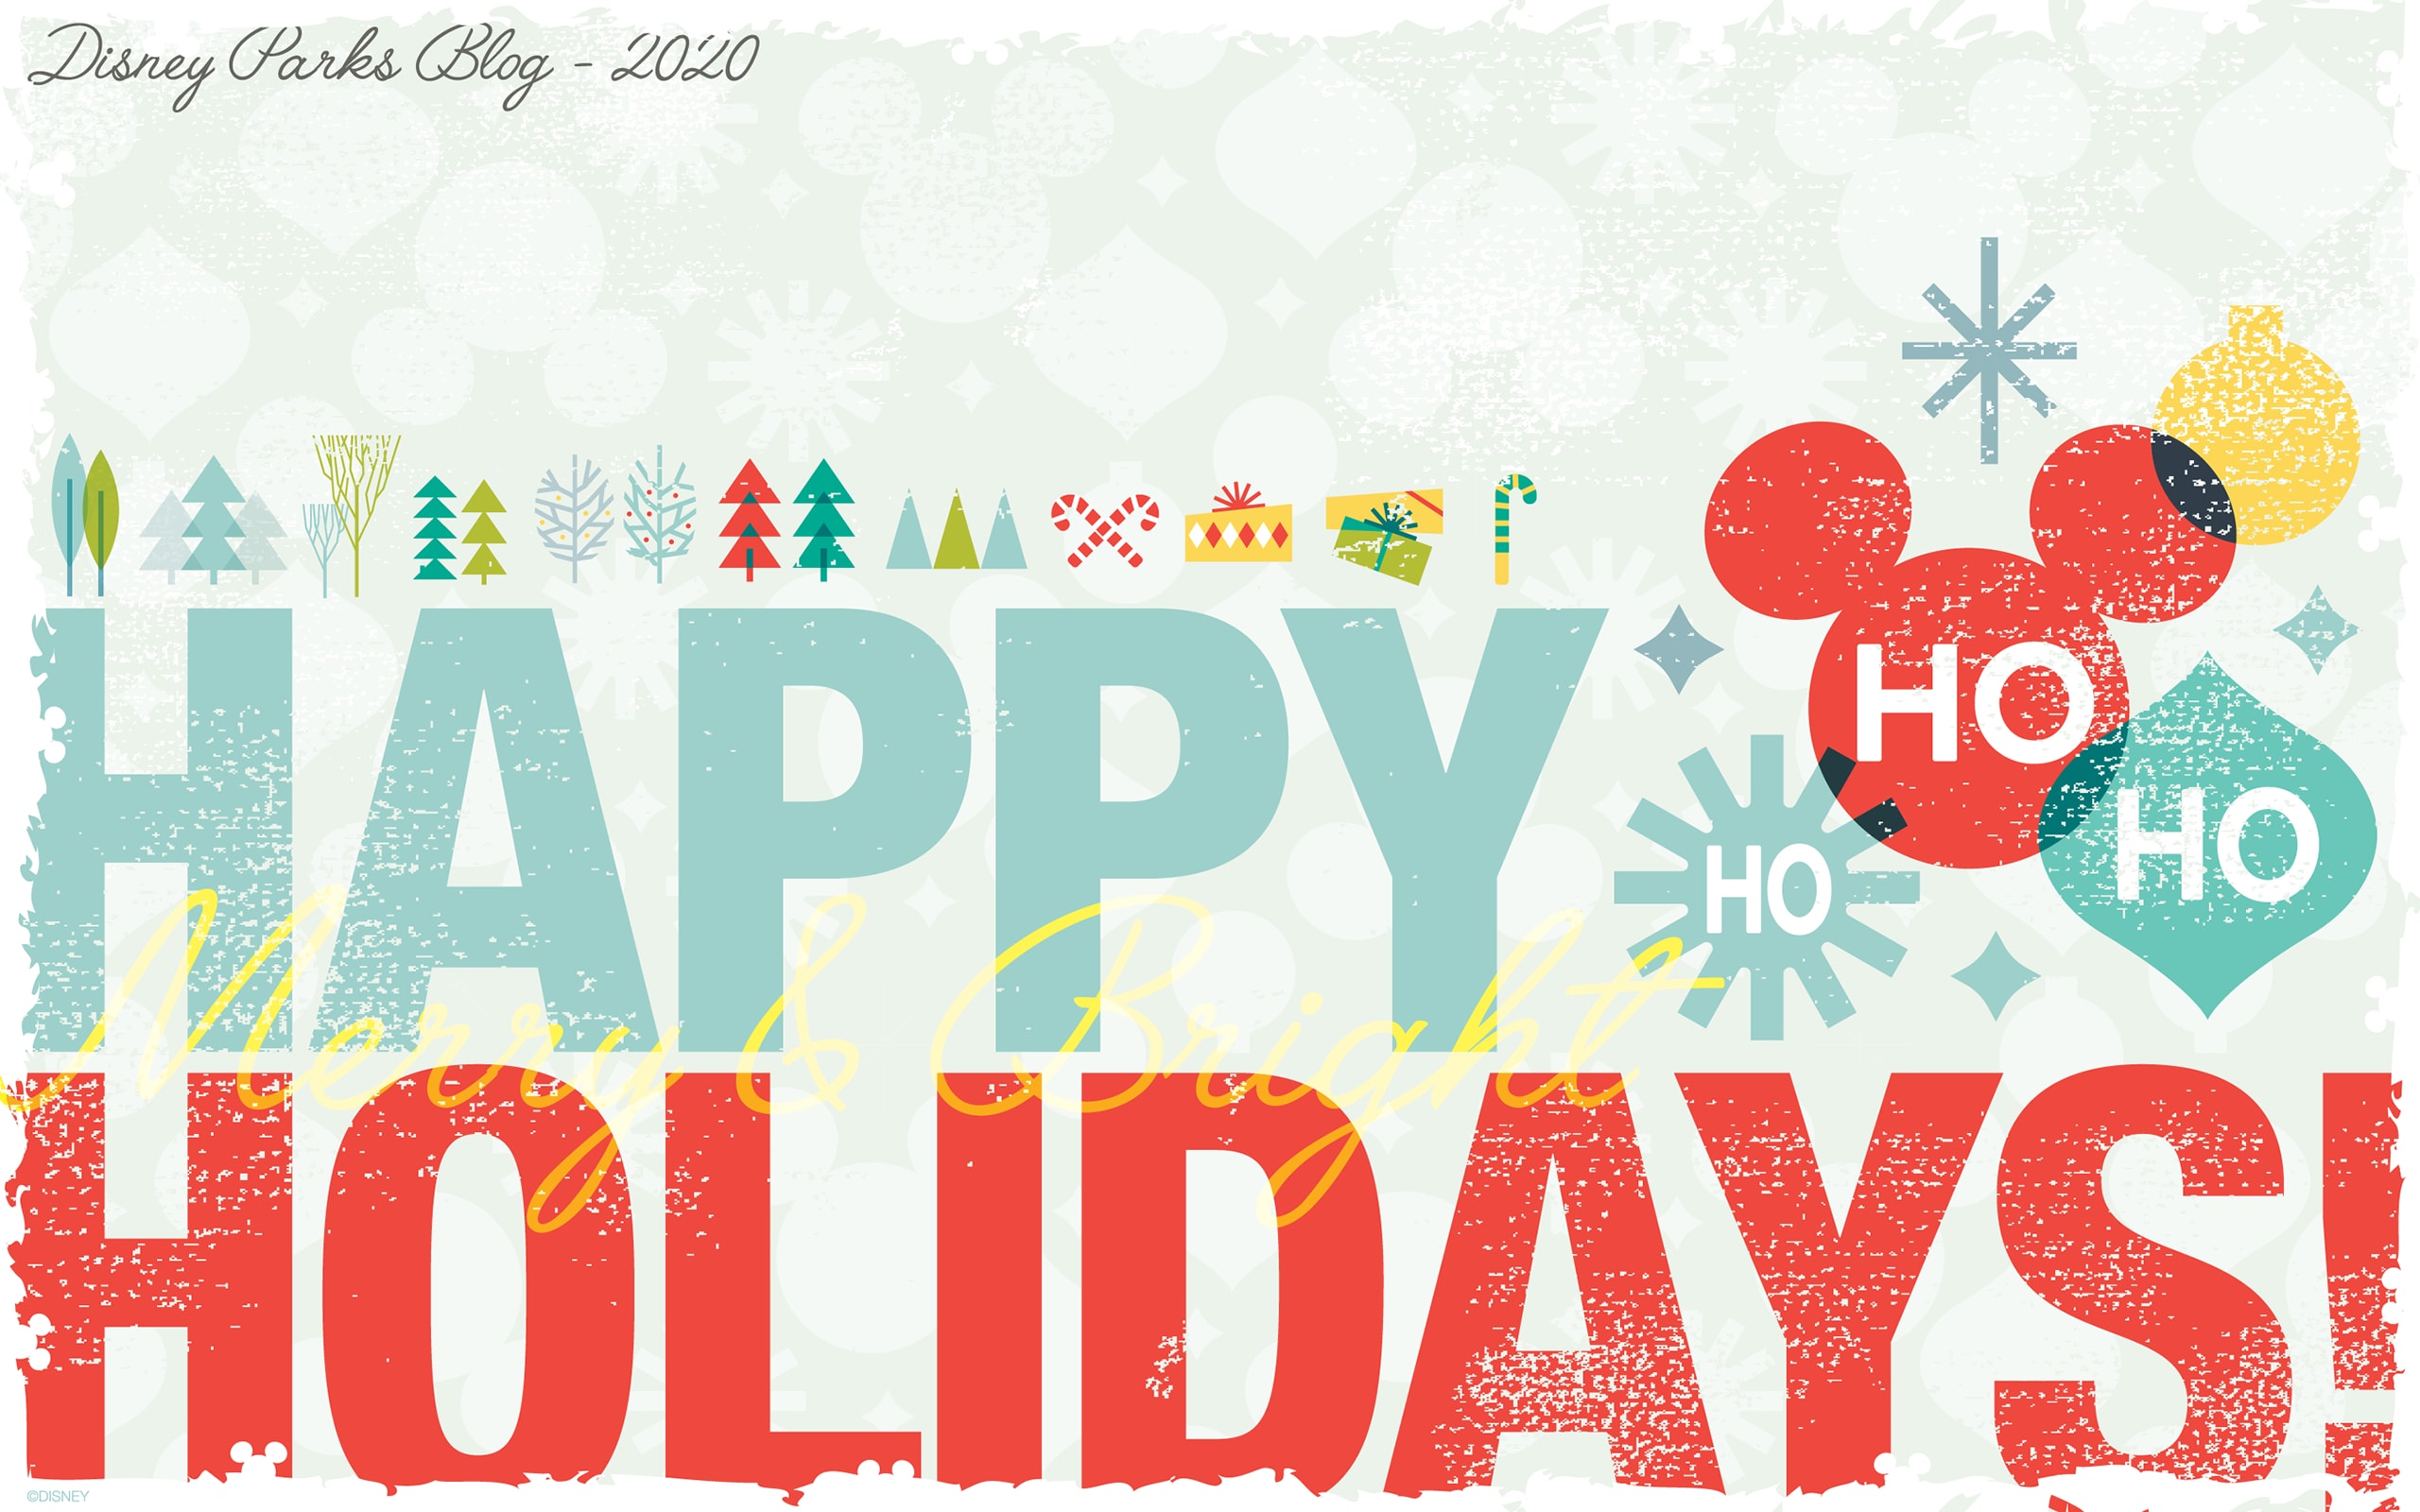 2020 Happy Holidays Wallpaper – Desktop/iPad | Disney Parks Blog